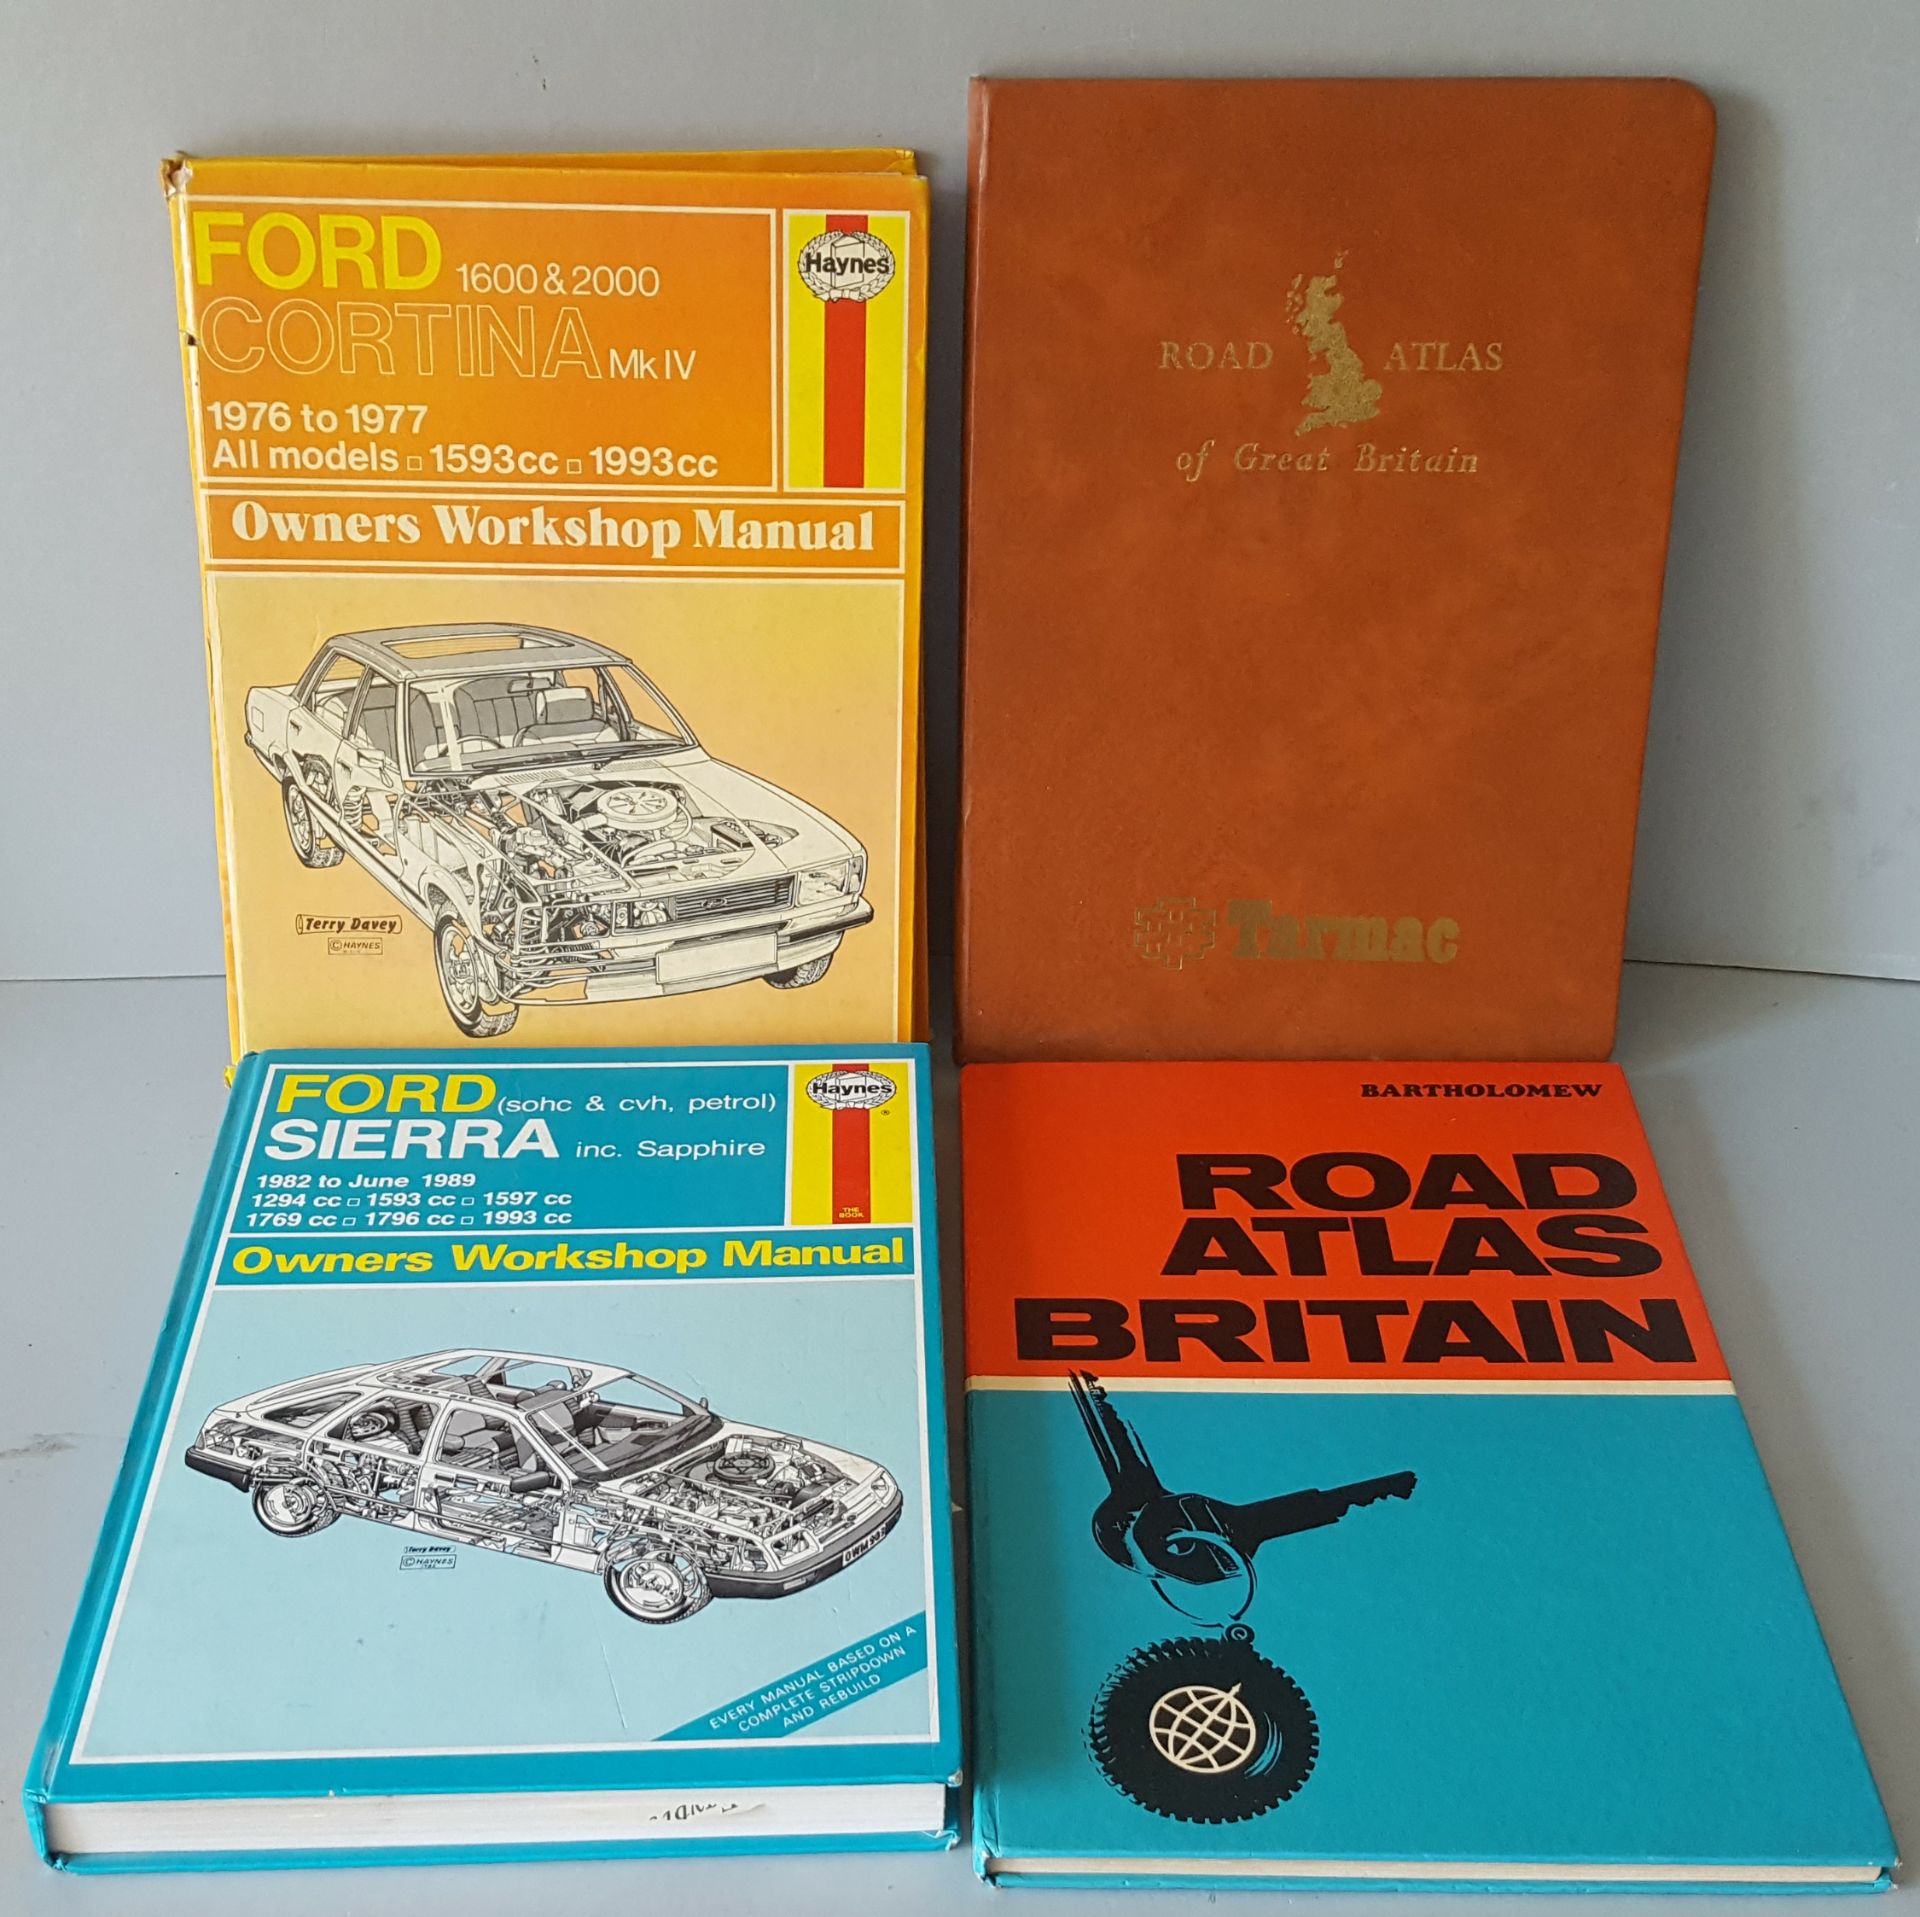 Vintage Motoring Books Automobilia Includes Triumph Herald & Ford Cortina - Image 2 of 3